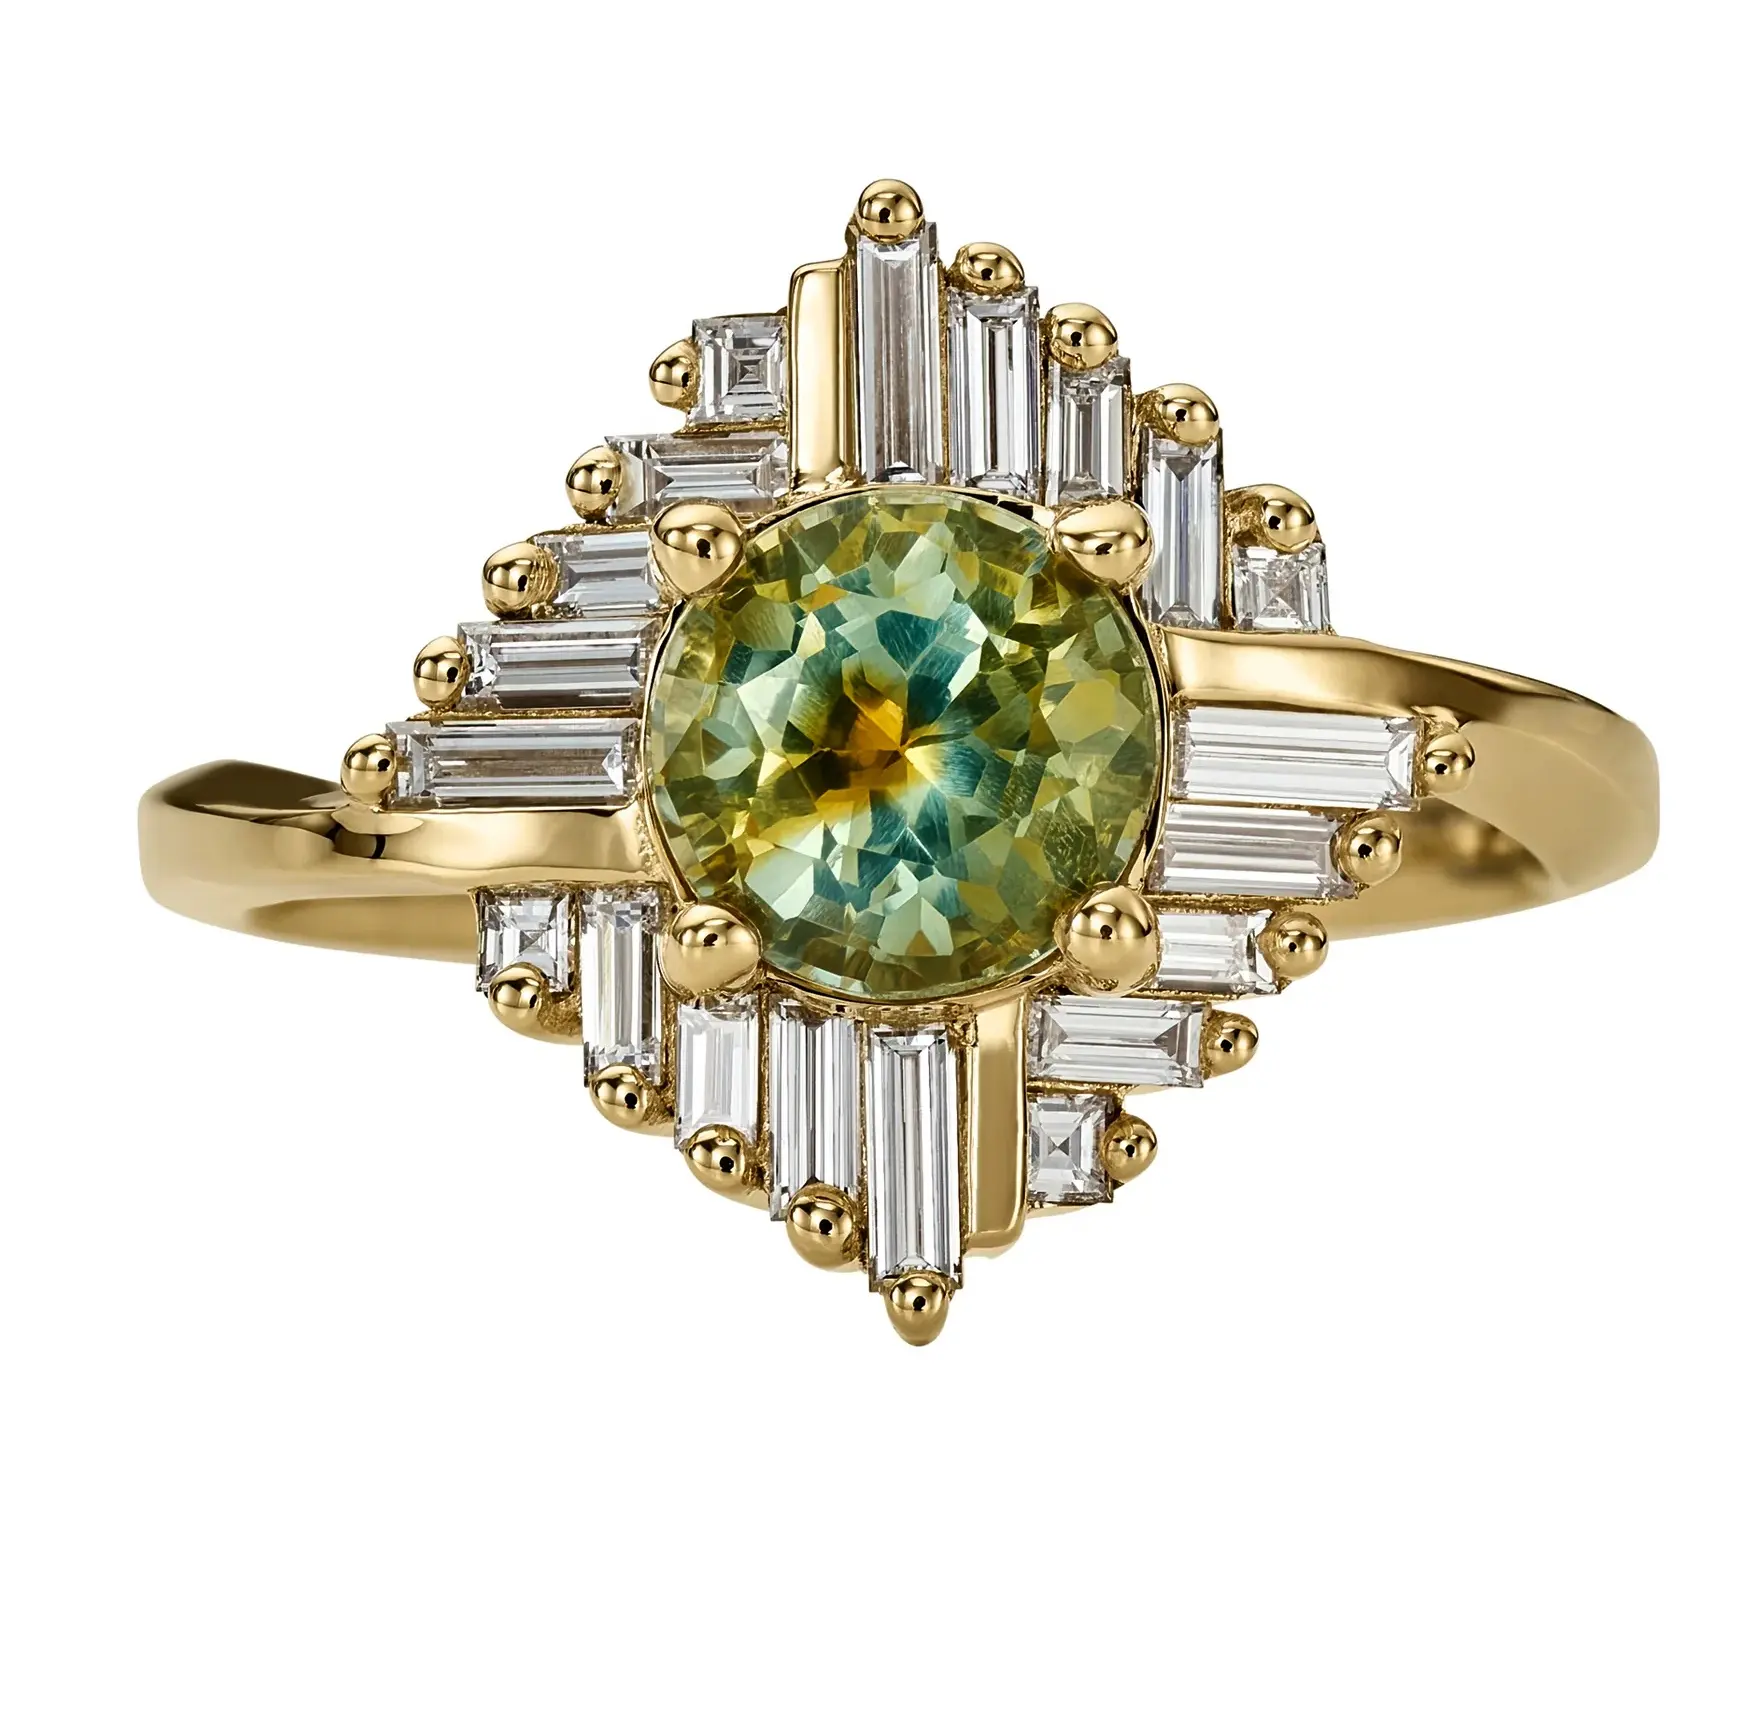 Milskye artístico fino clásico vintage moda 18K chapado en oro 925 Plata oasis zafiro y baguette diamante anillo de compromiso